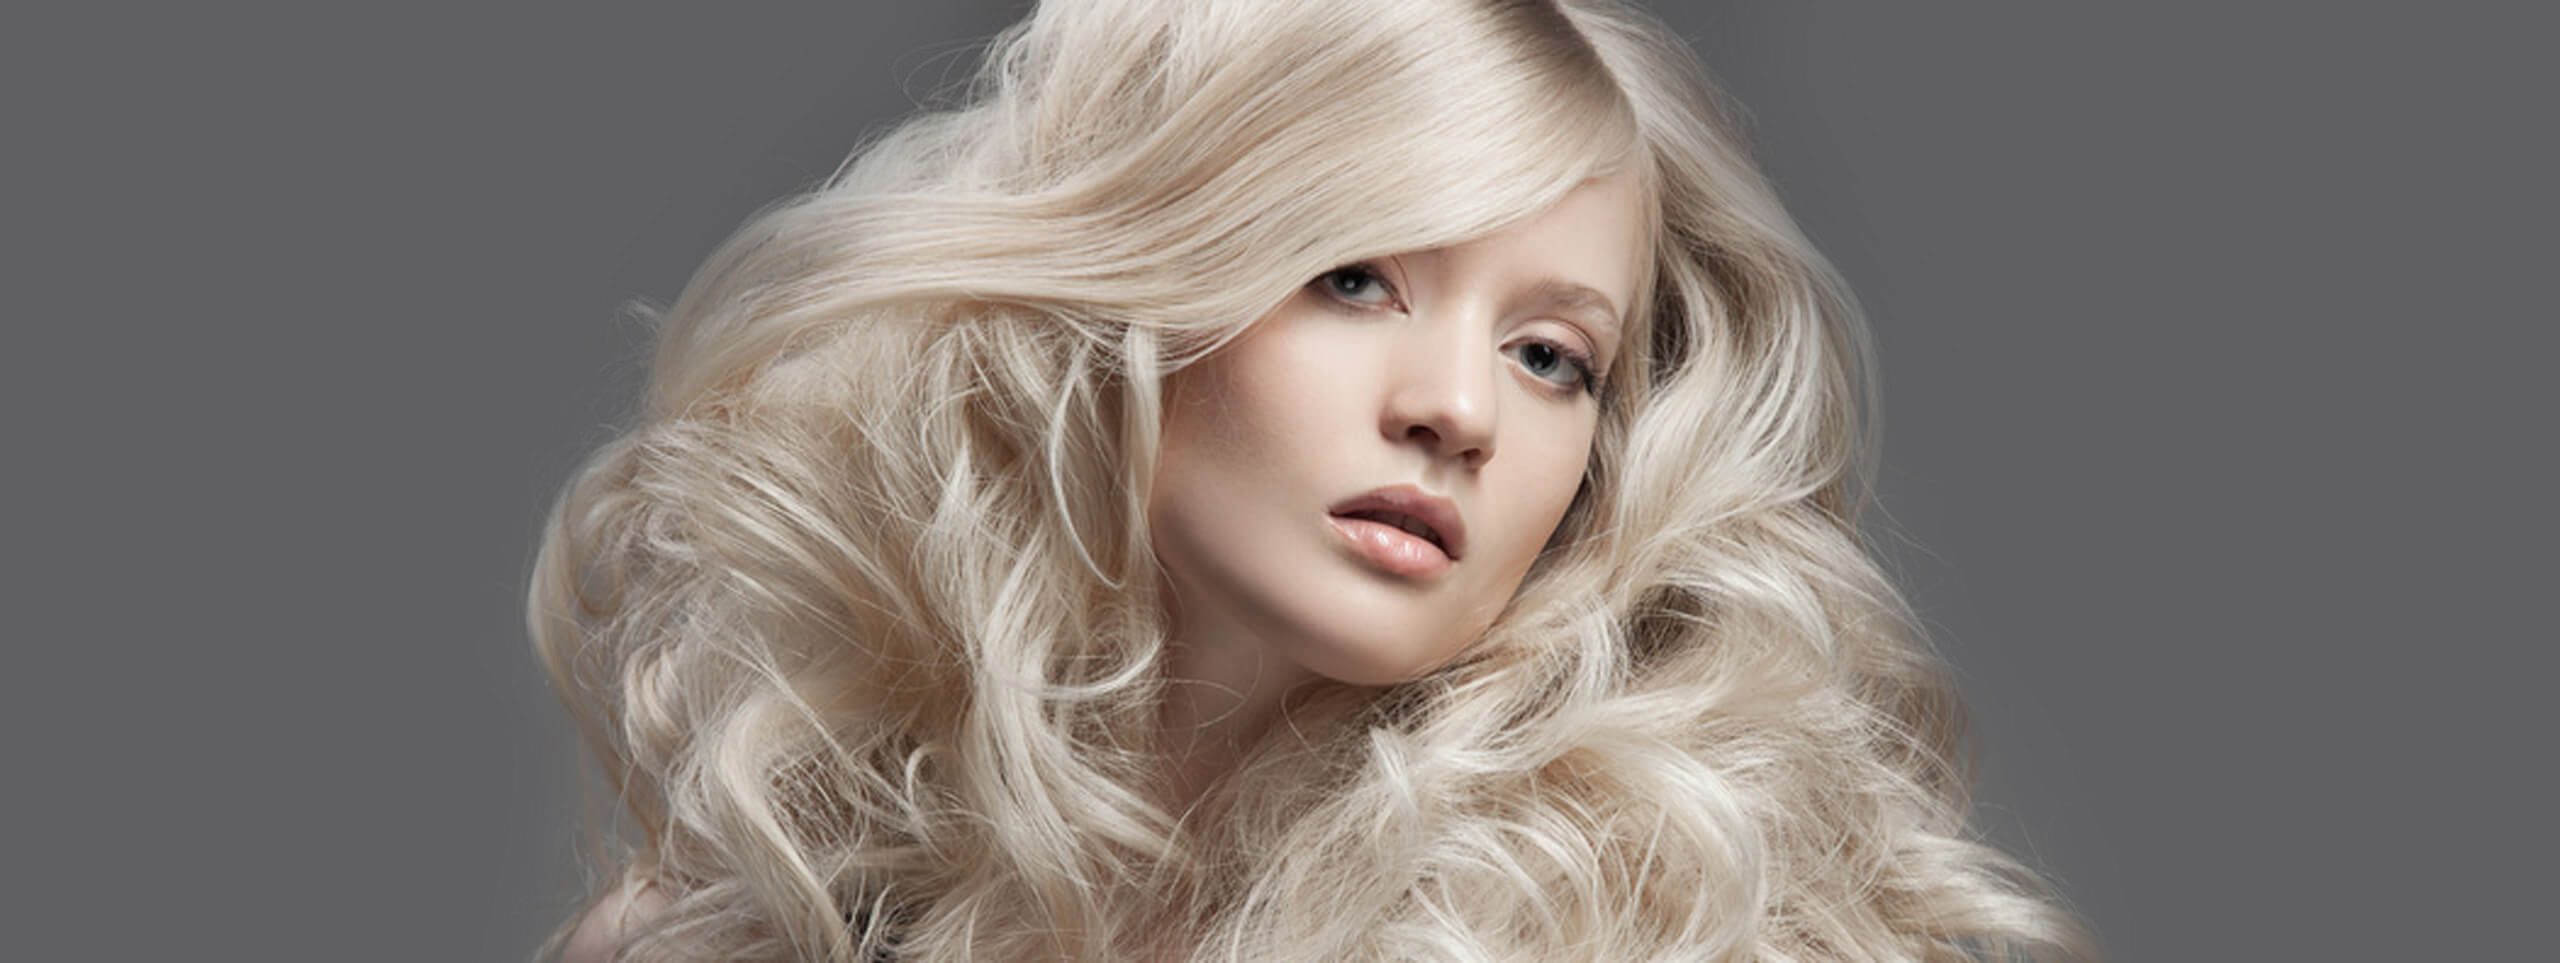 Femme blonde chevelure volumineuse